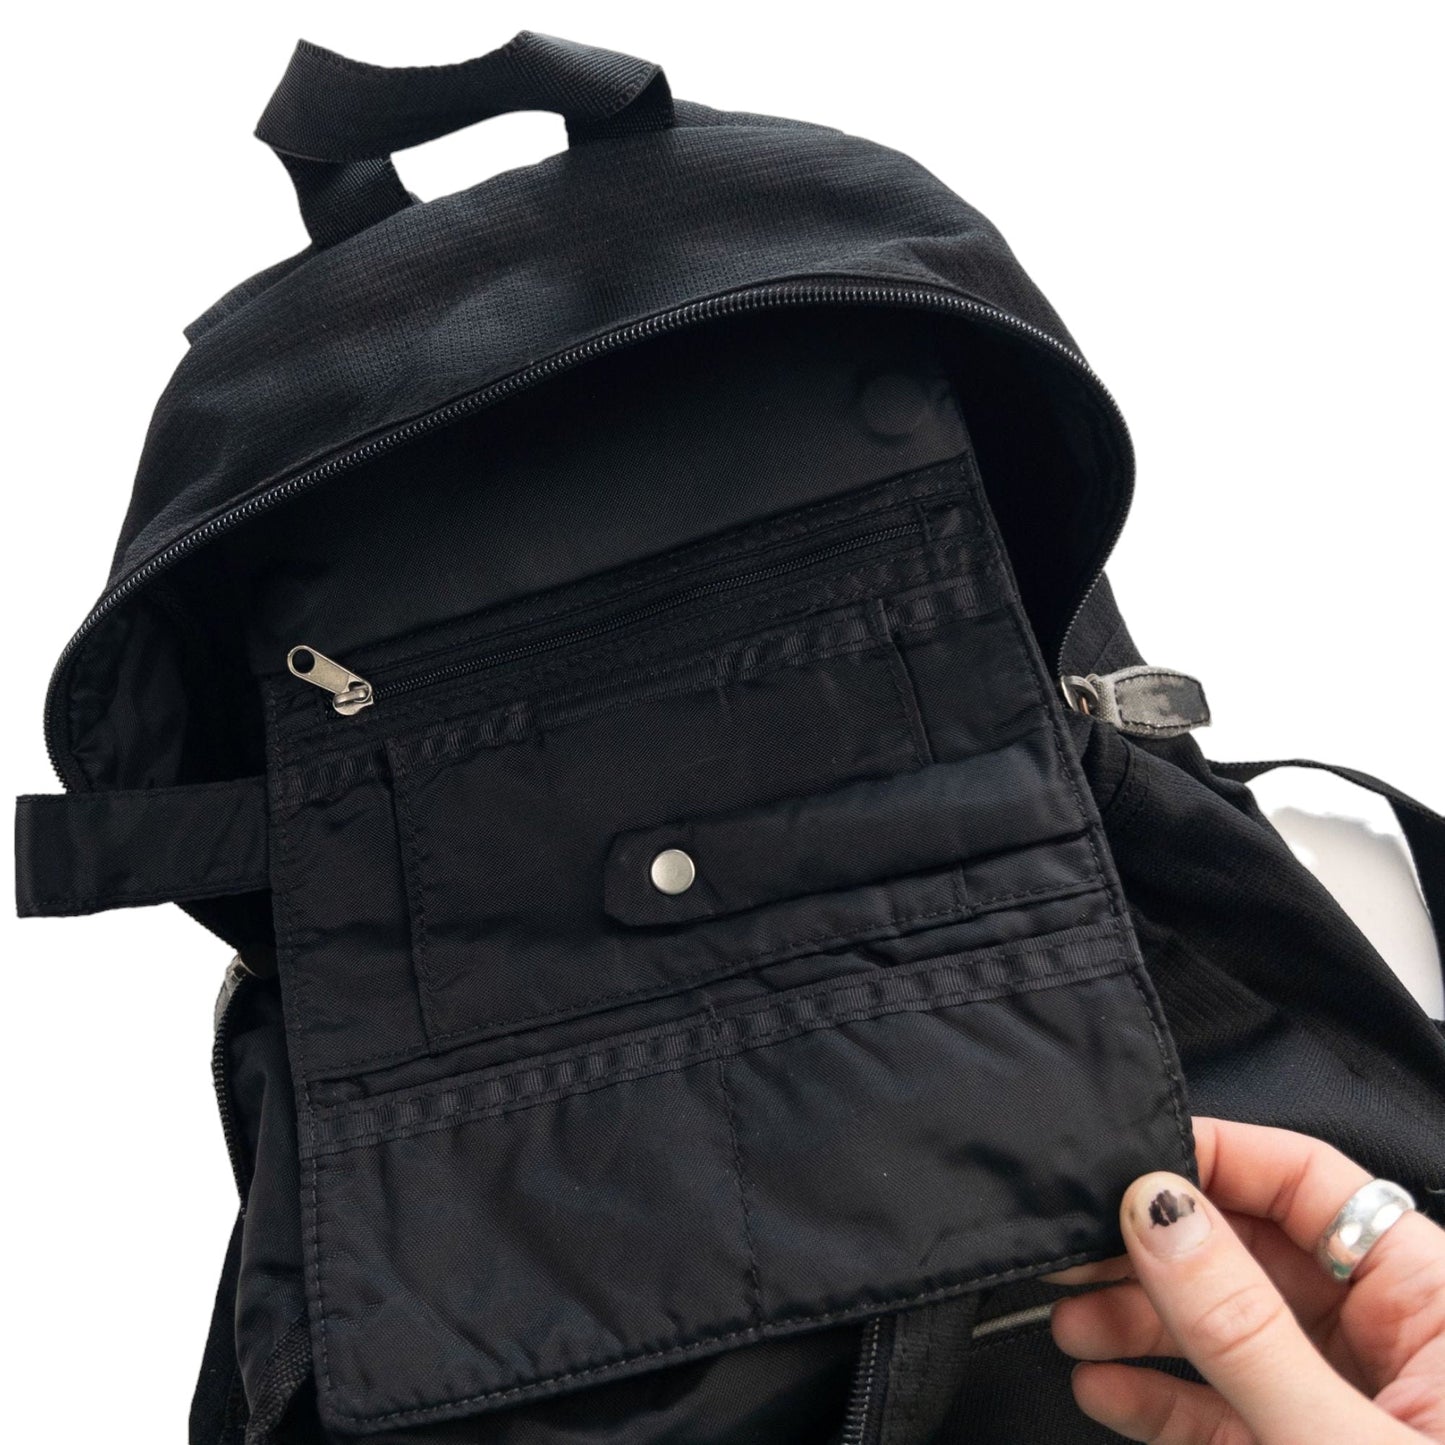 VIntage Nike Black Backpack